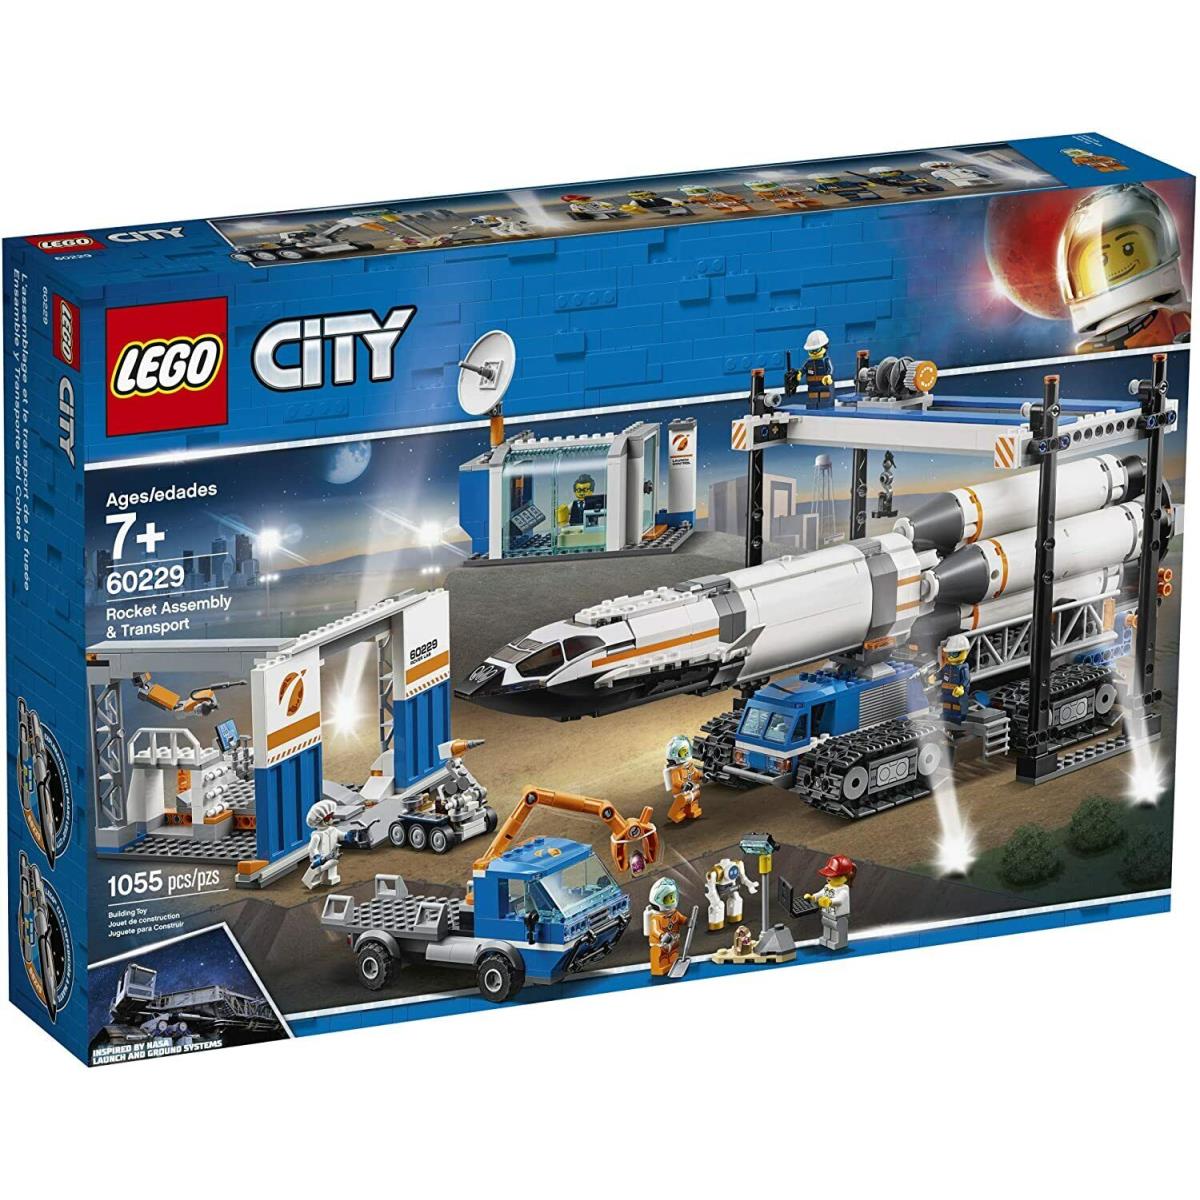 Lego City 60229 Nasa-inspo Rocket Assembly Transport w/ 7 Minifigs 1055pcs